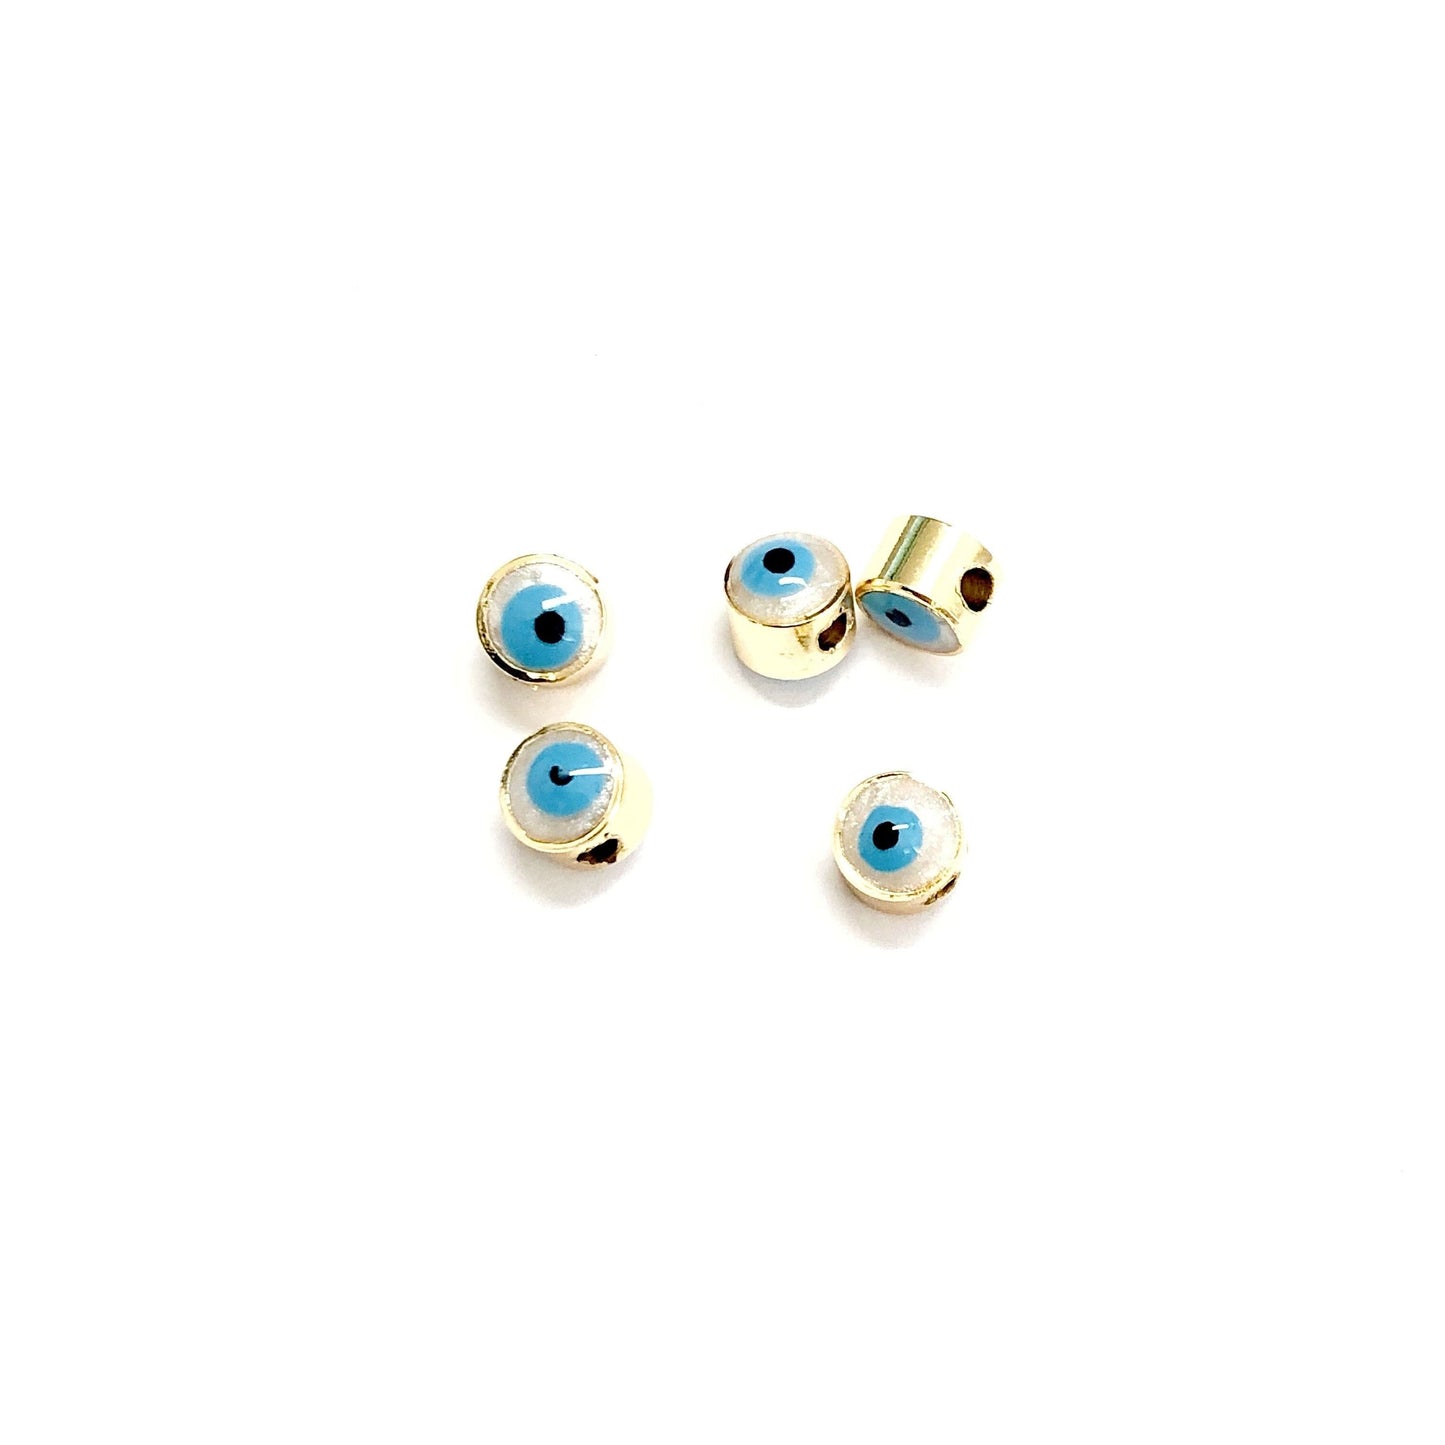 Vergoldete verputzte Böse-Augen-Perlen 6 mm - Perlglanz 